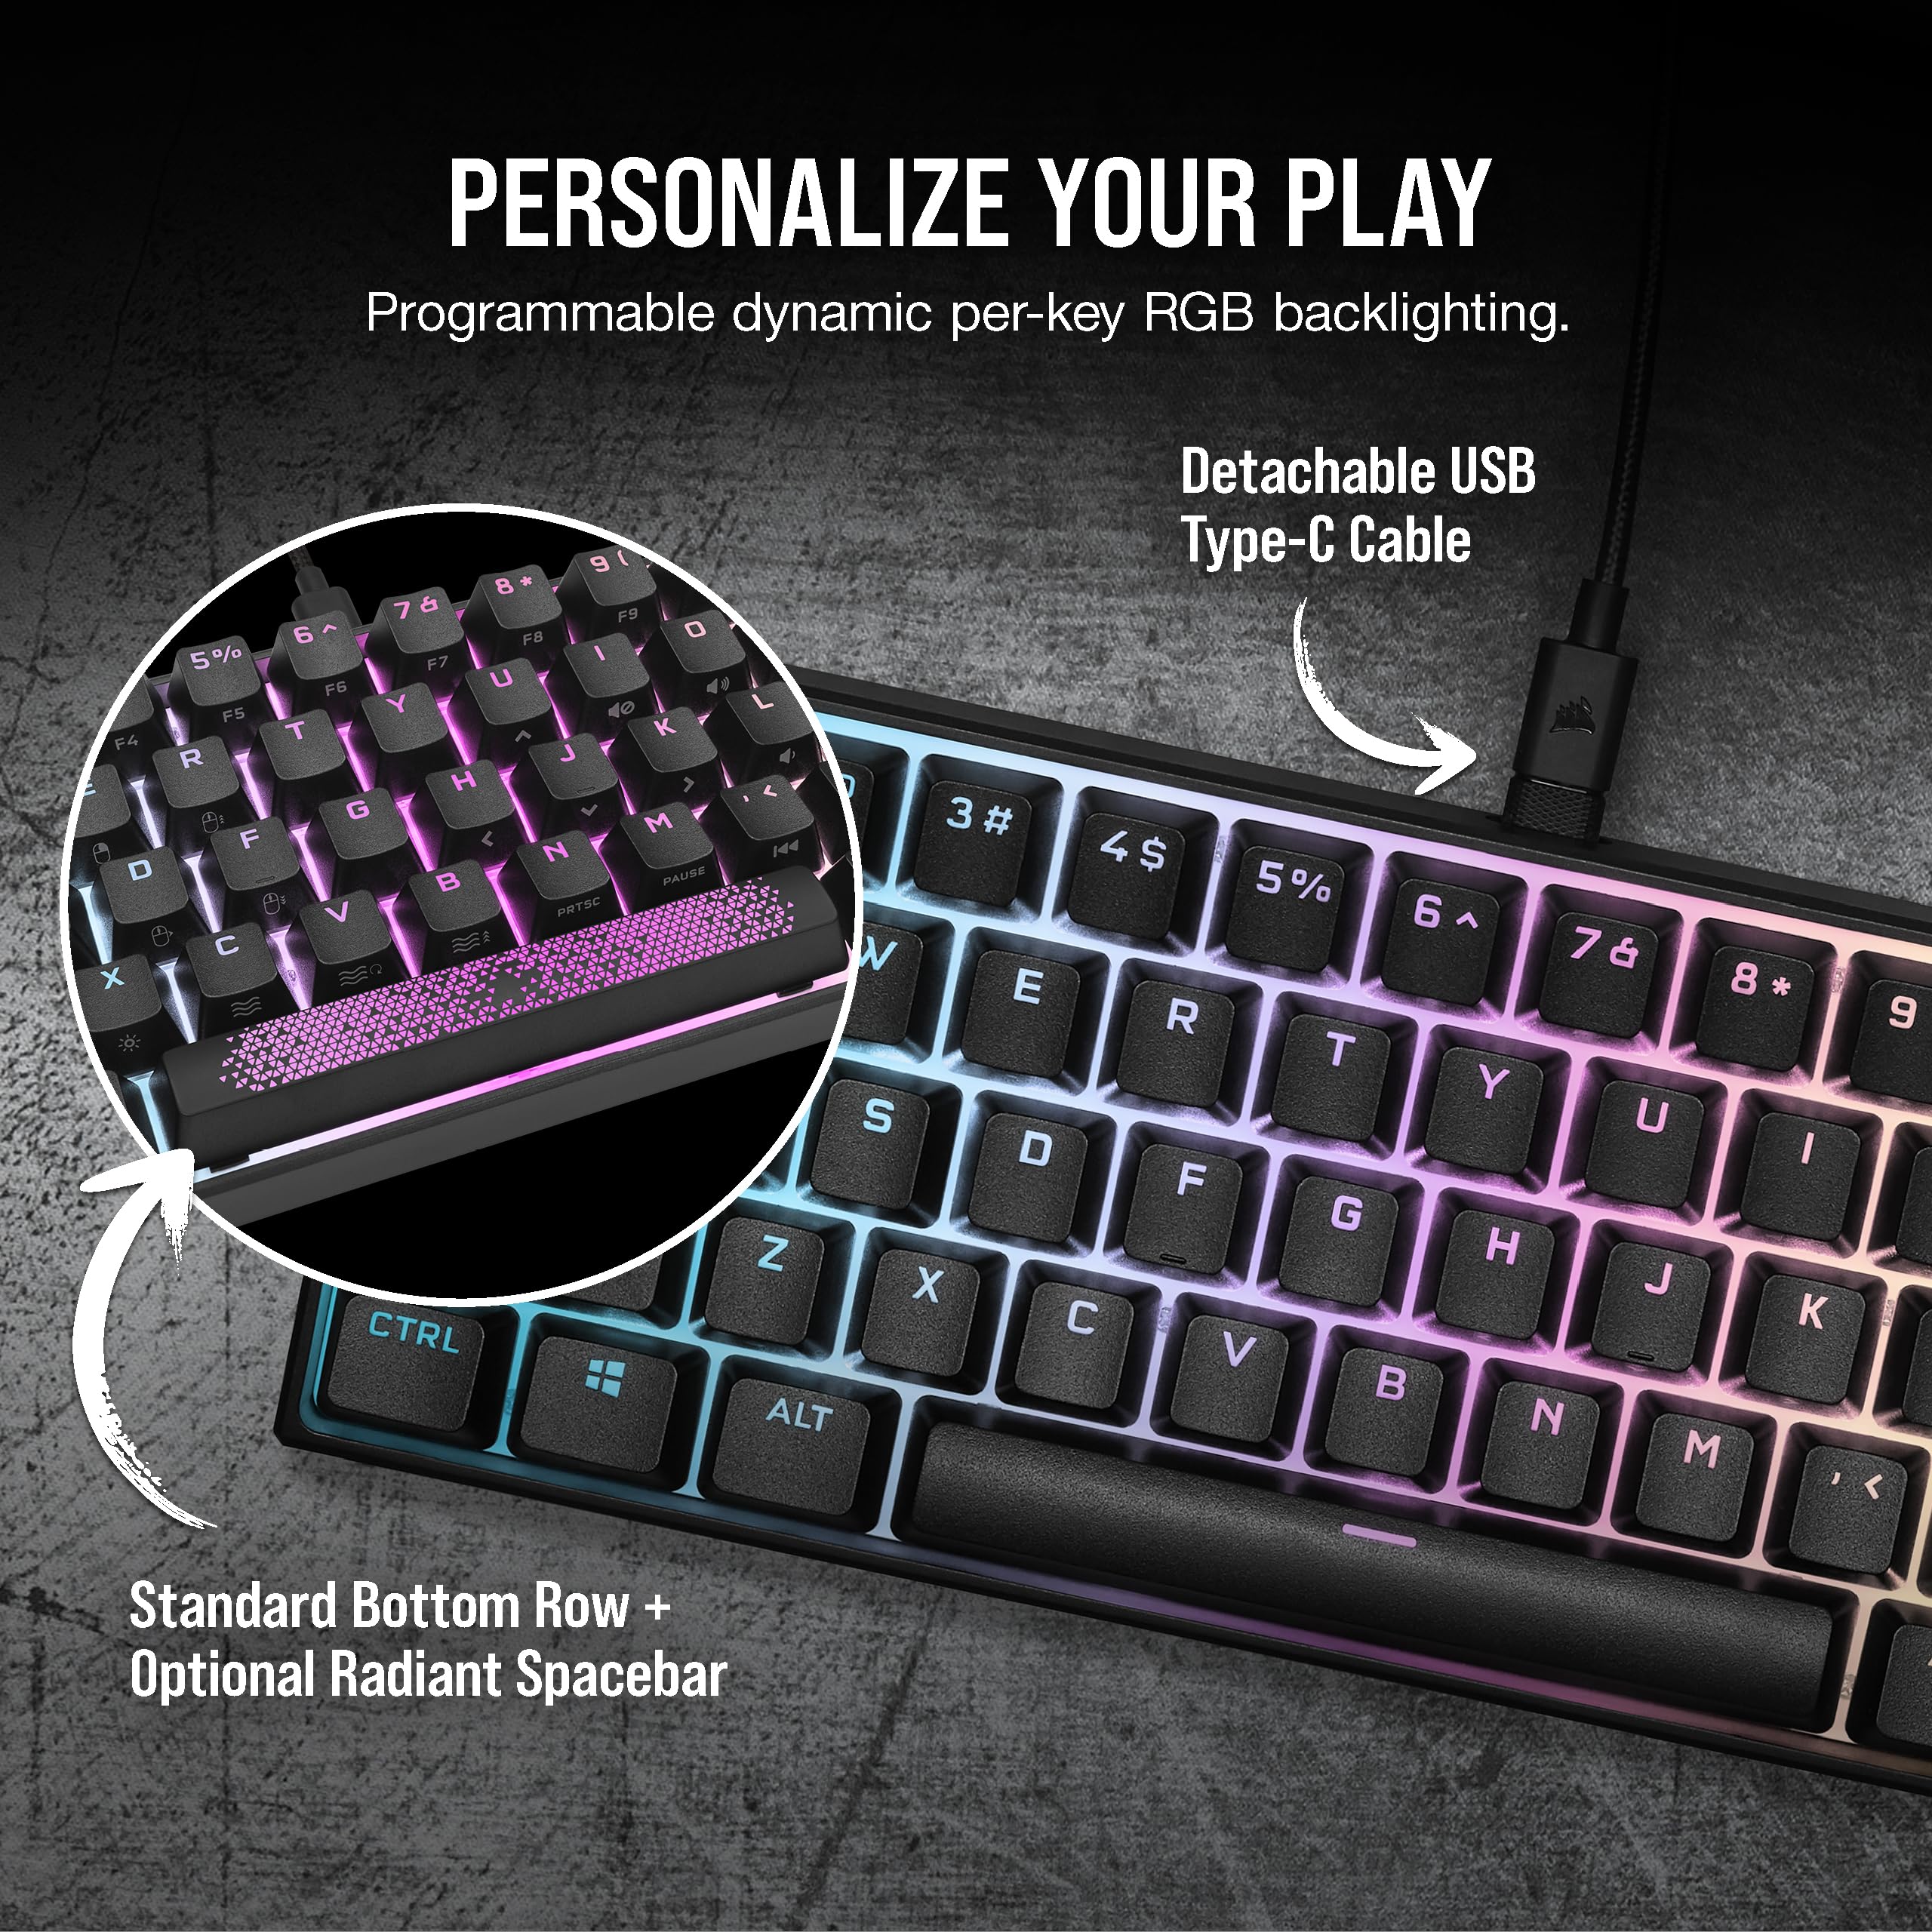 Corsair K65 RGB Mini 60% Mechanical Gaming Keyboard - Cherry MX Brown Mechanical Keyswitches - Customizable Per-Key RGB Backlighting - Detachable USB Type-C Cable - QWERTY NA Layout - Black